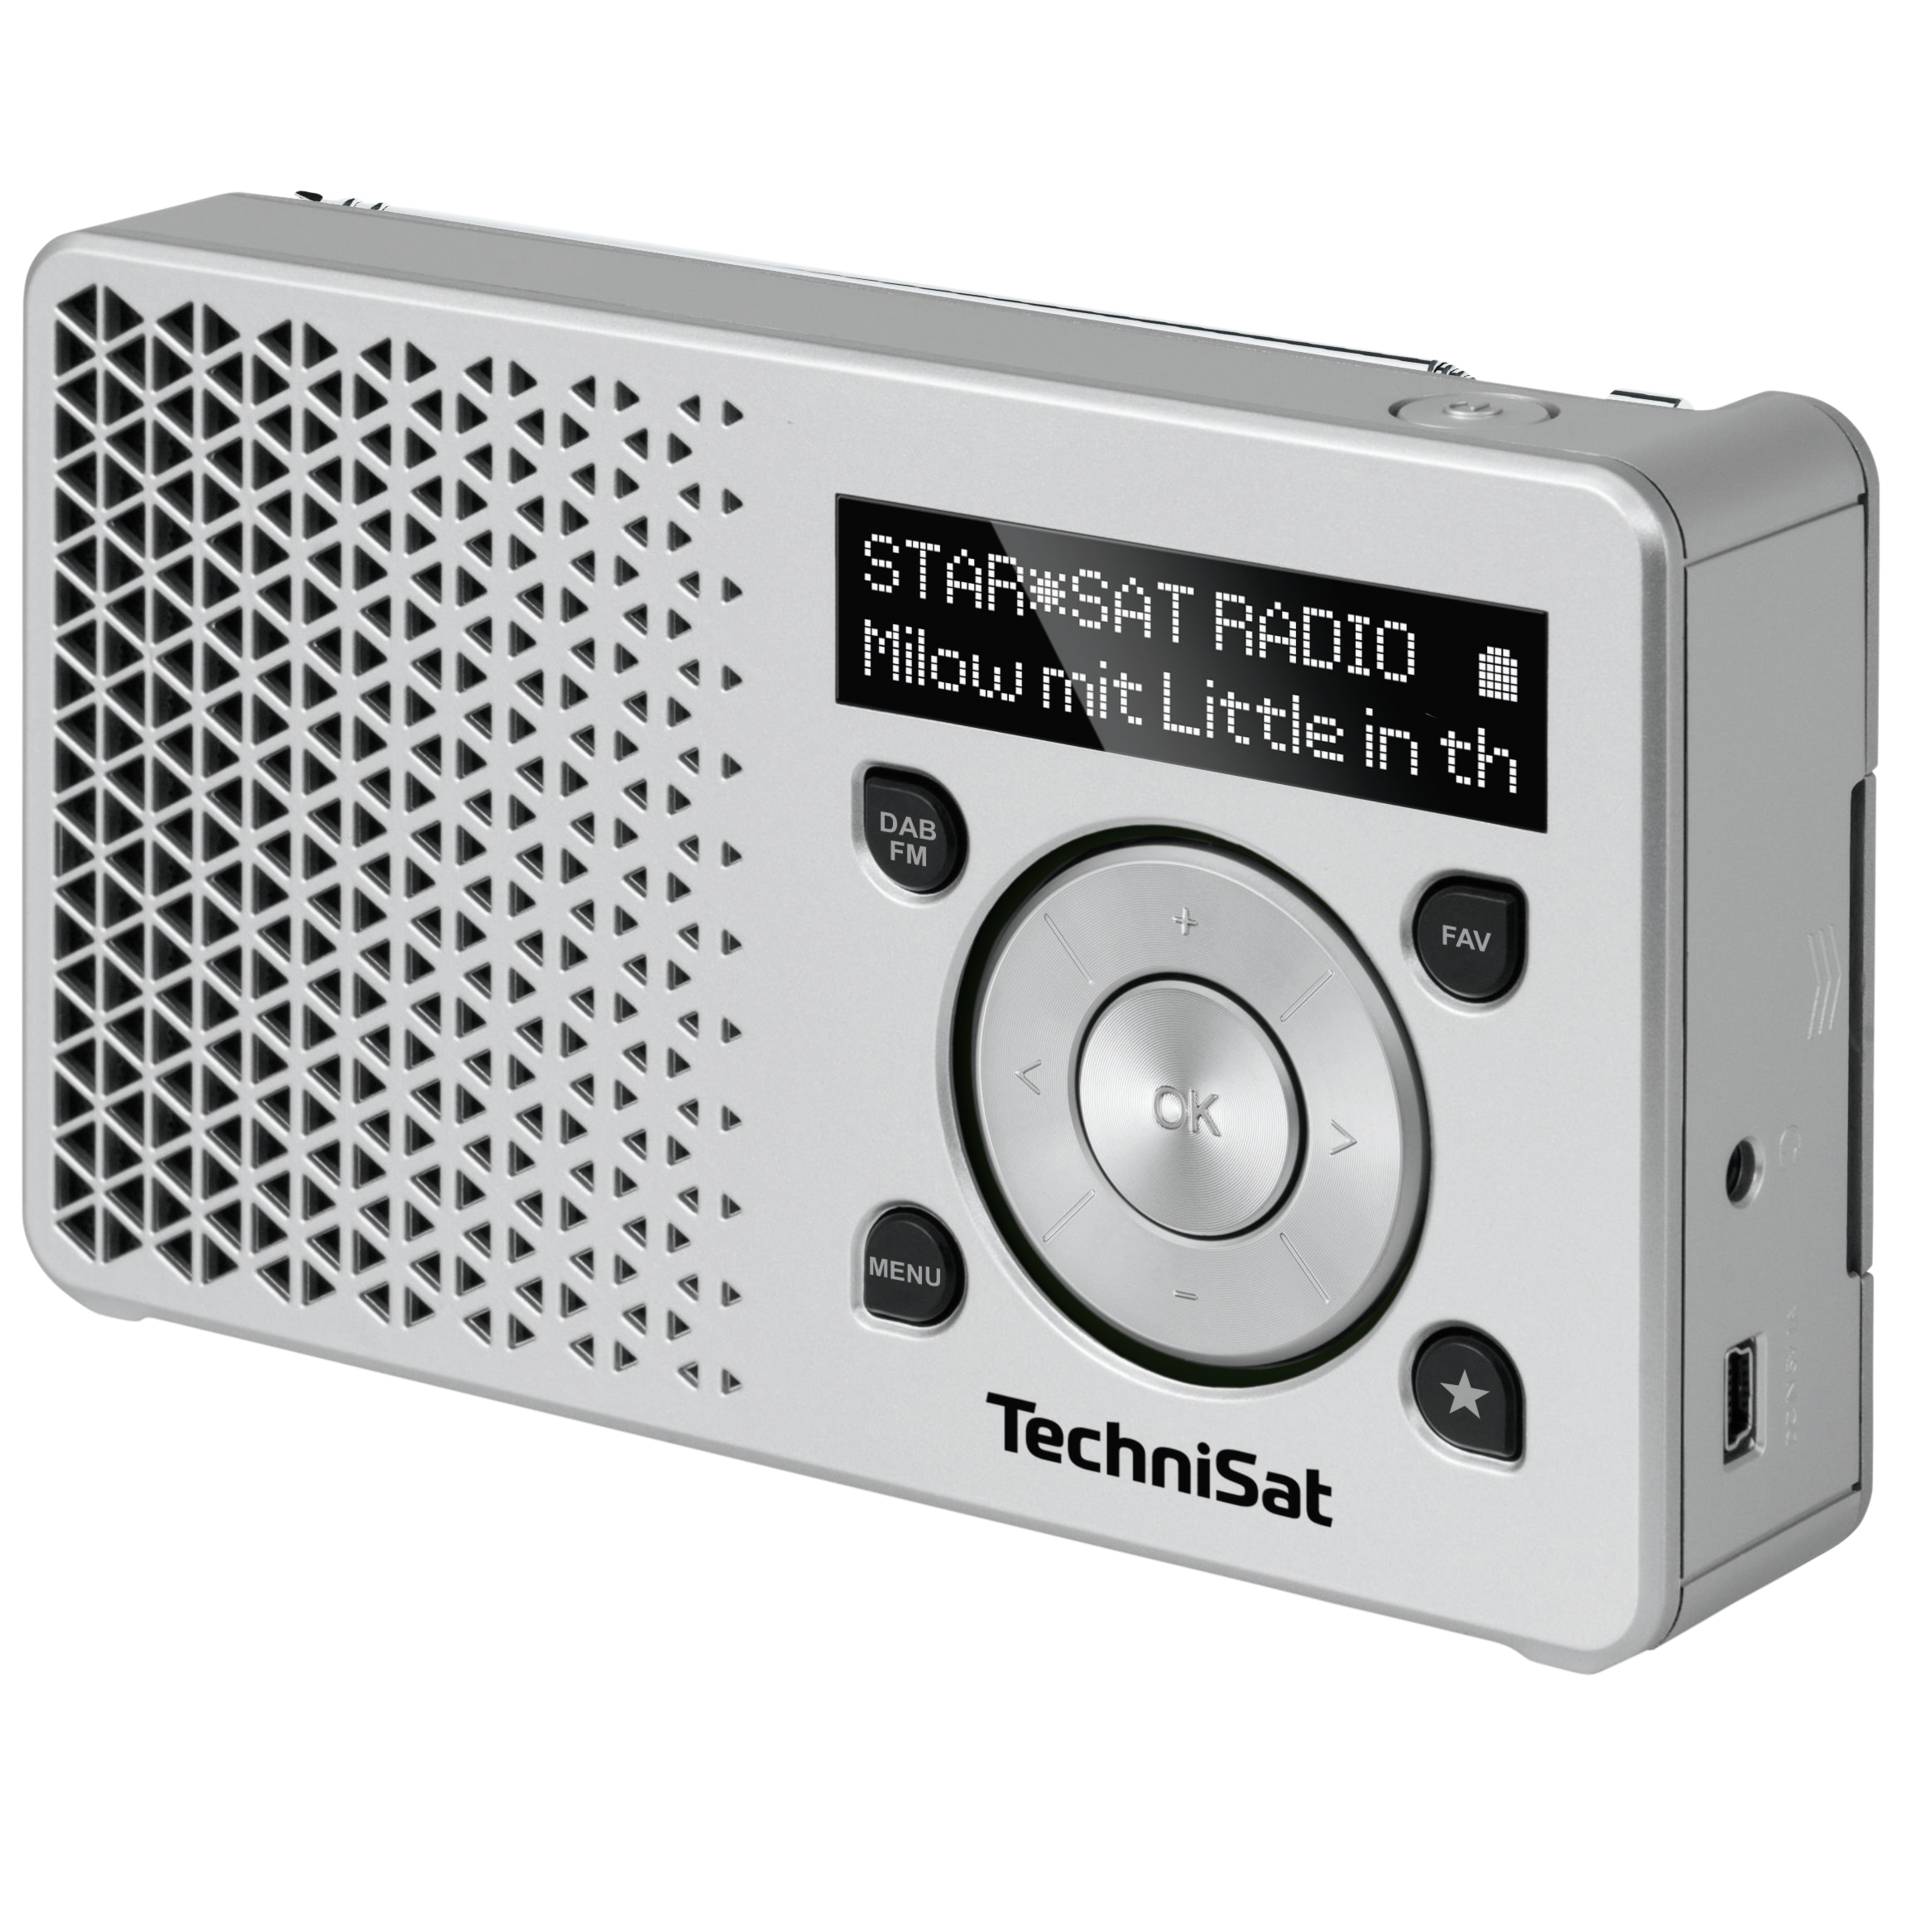 Technisat DigitRadio 1 argento